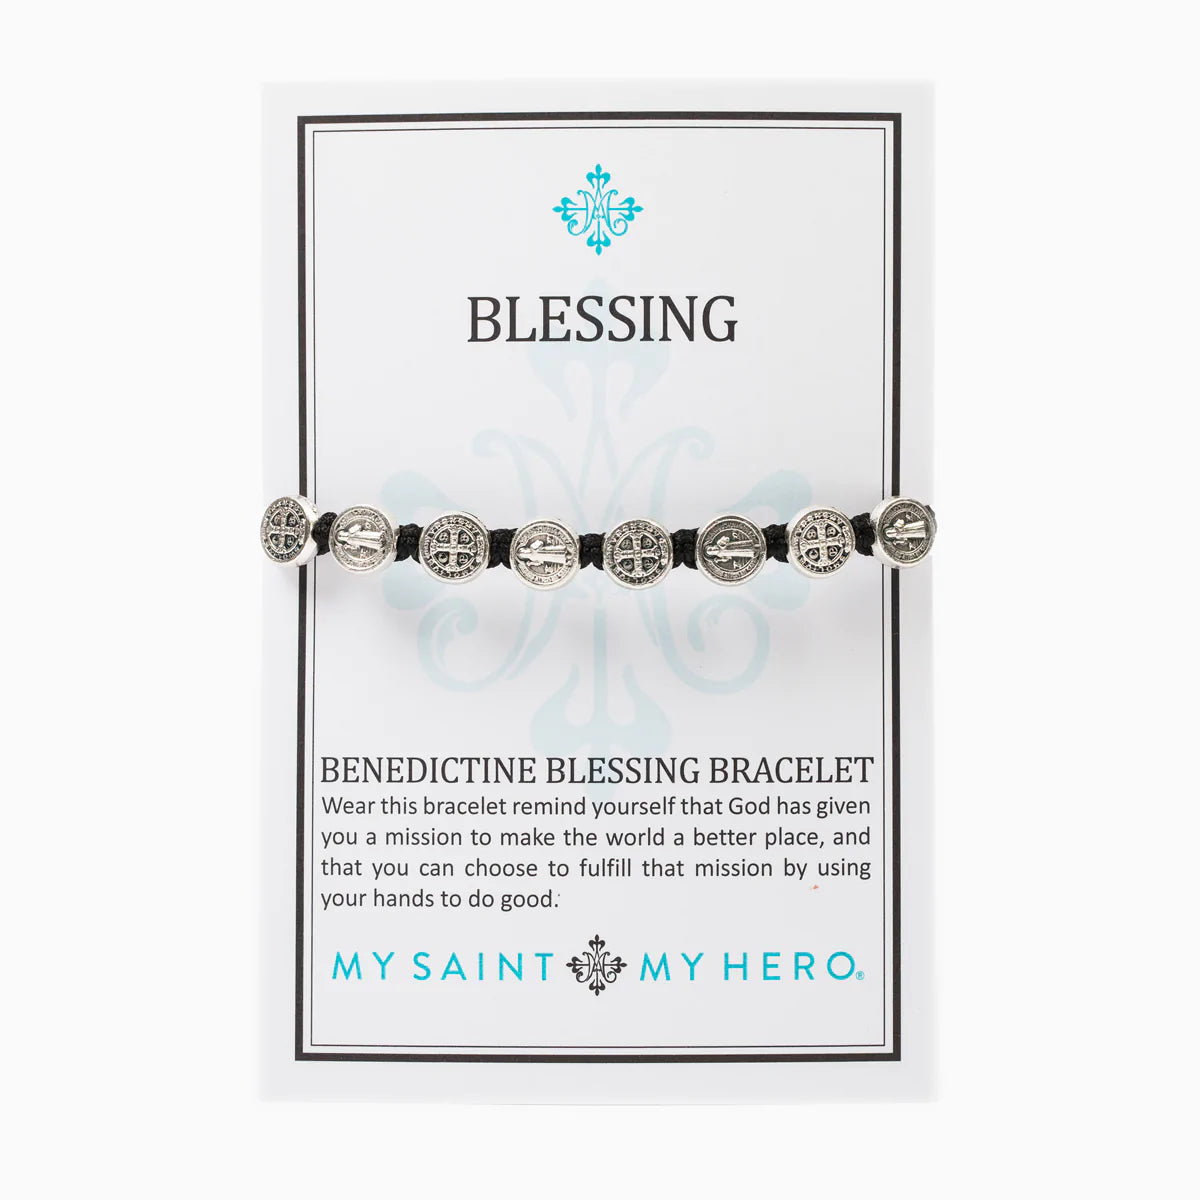 MSMH- Benedictine Blessing Bracelet